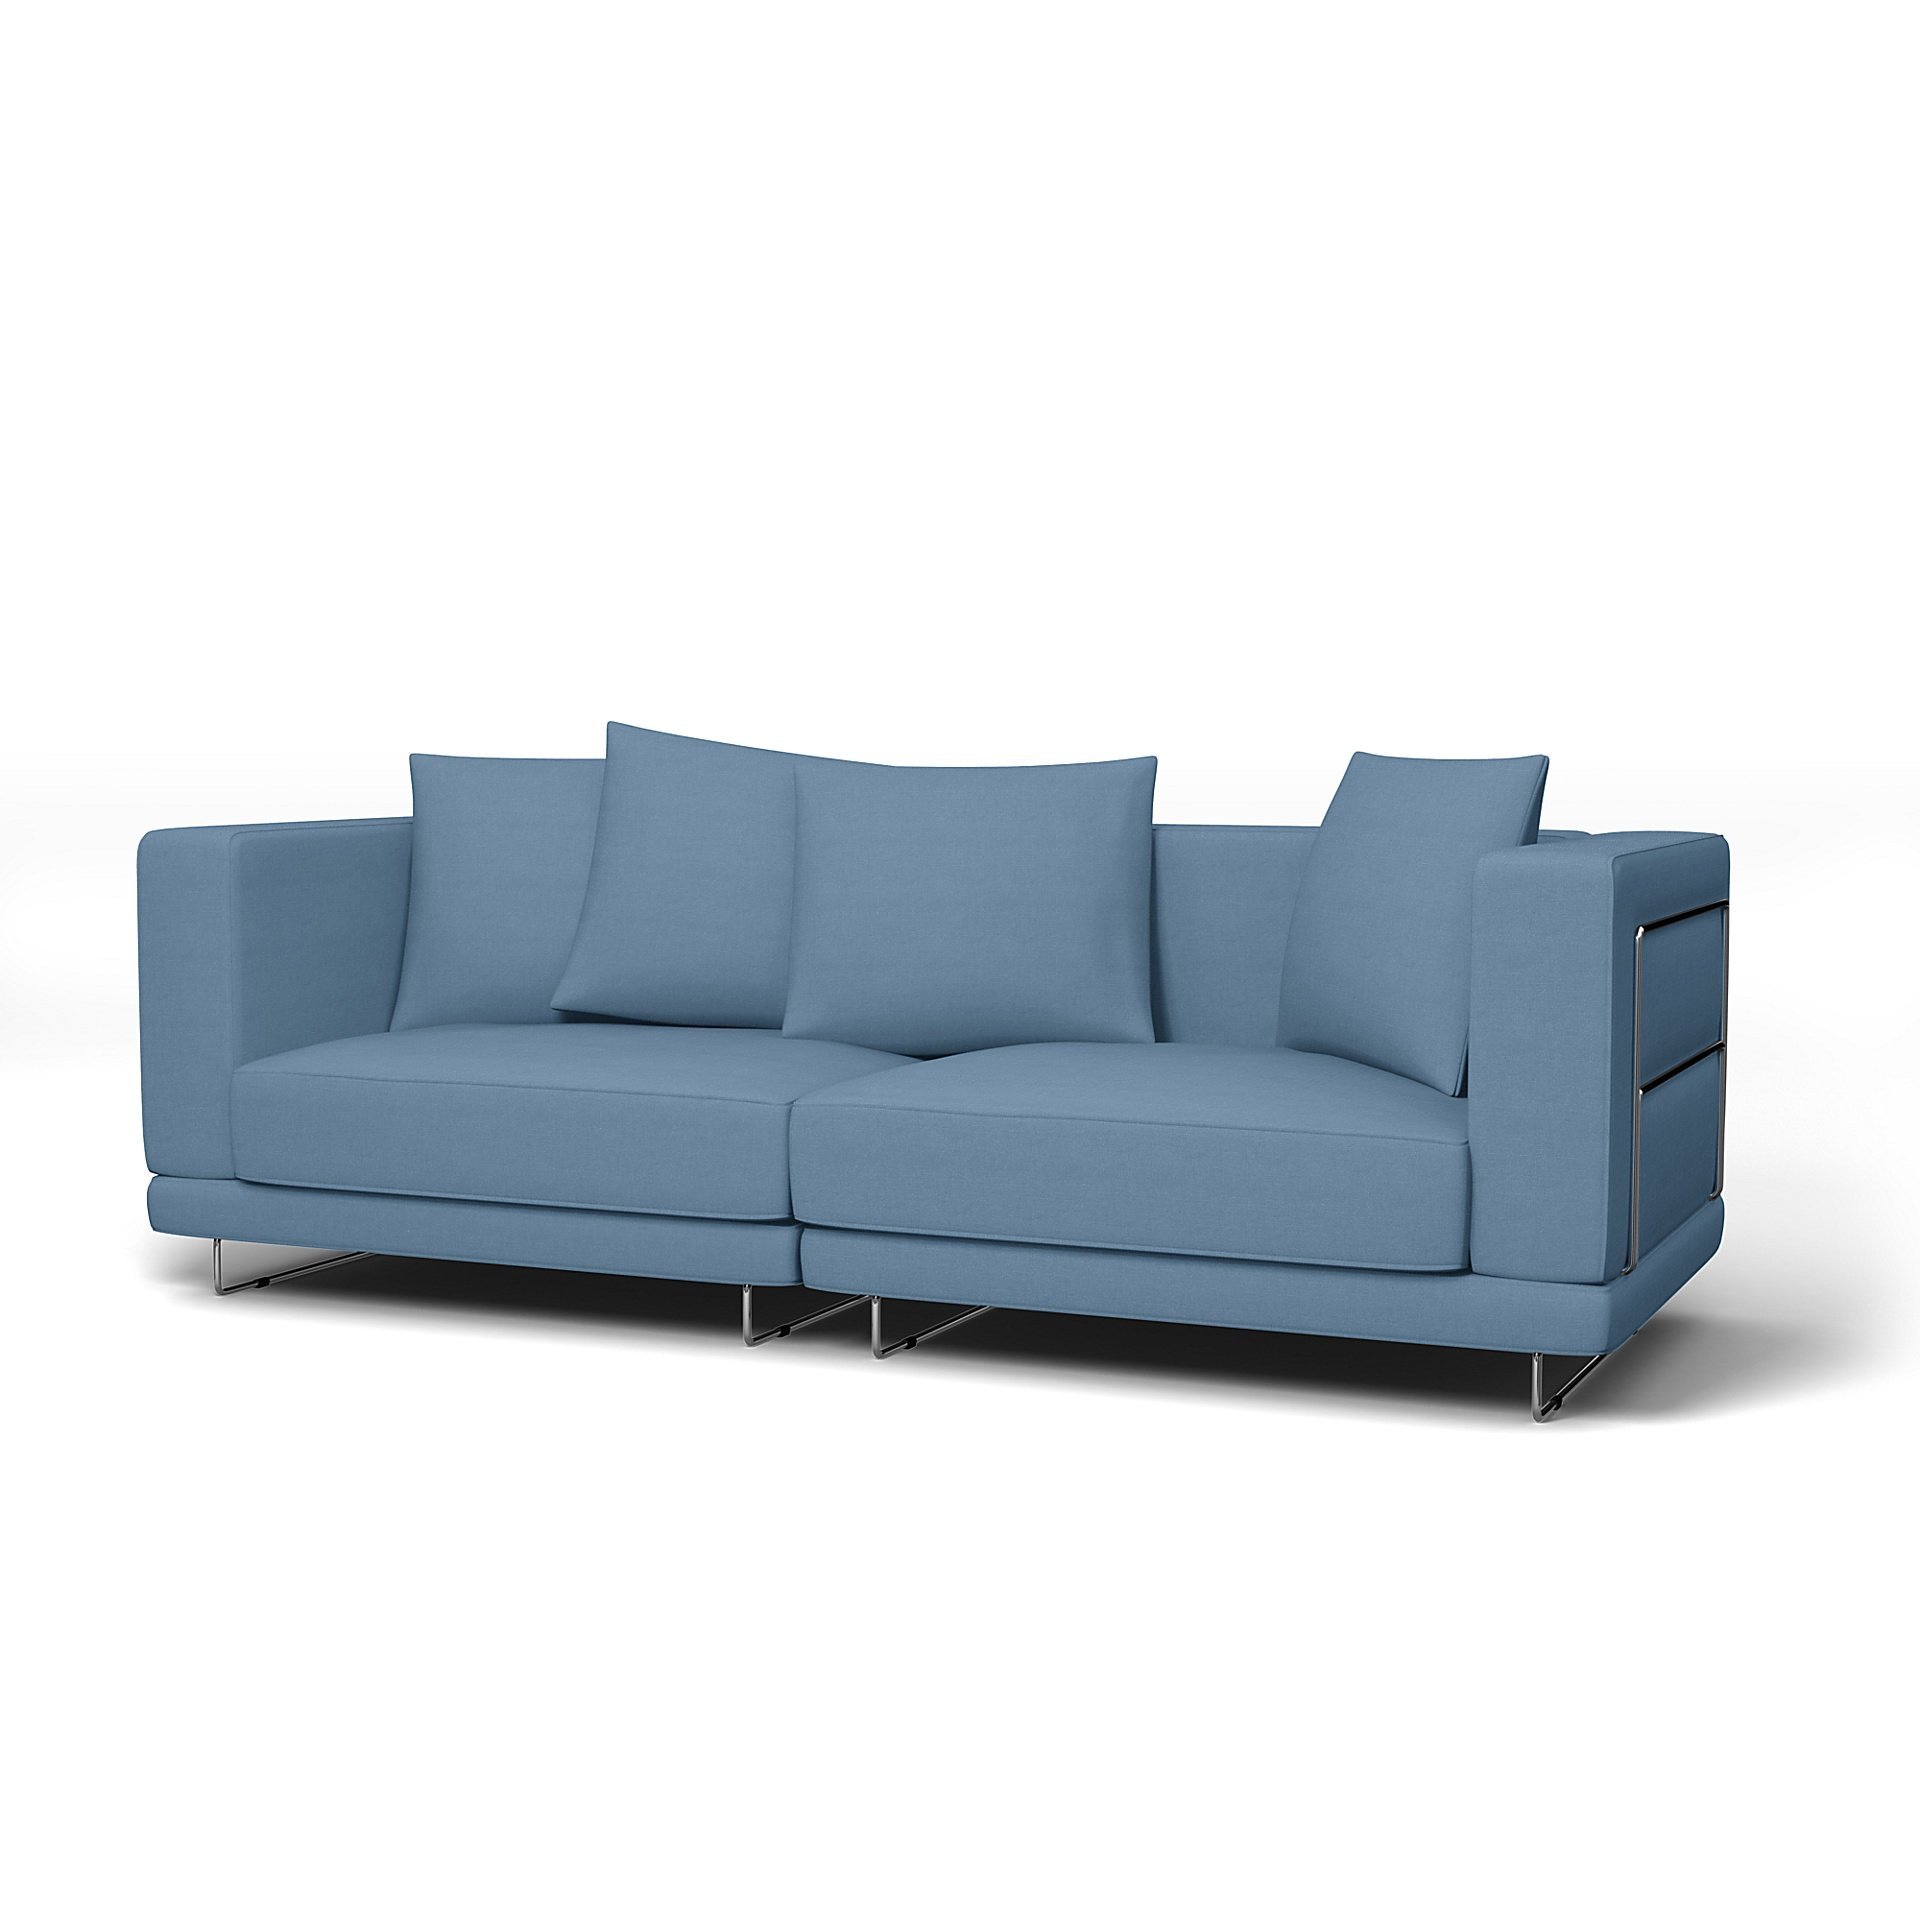 IKEA - Tylosand 3 Seater Sofa Cover, Vintage Blue, Linen - Bemz